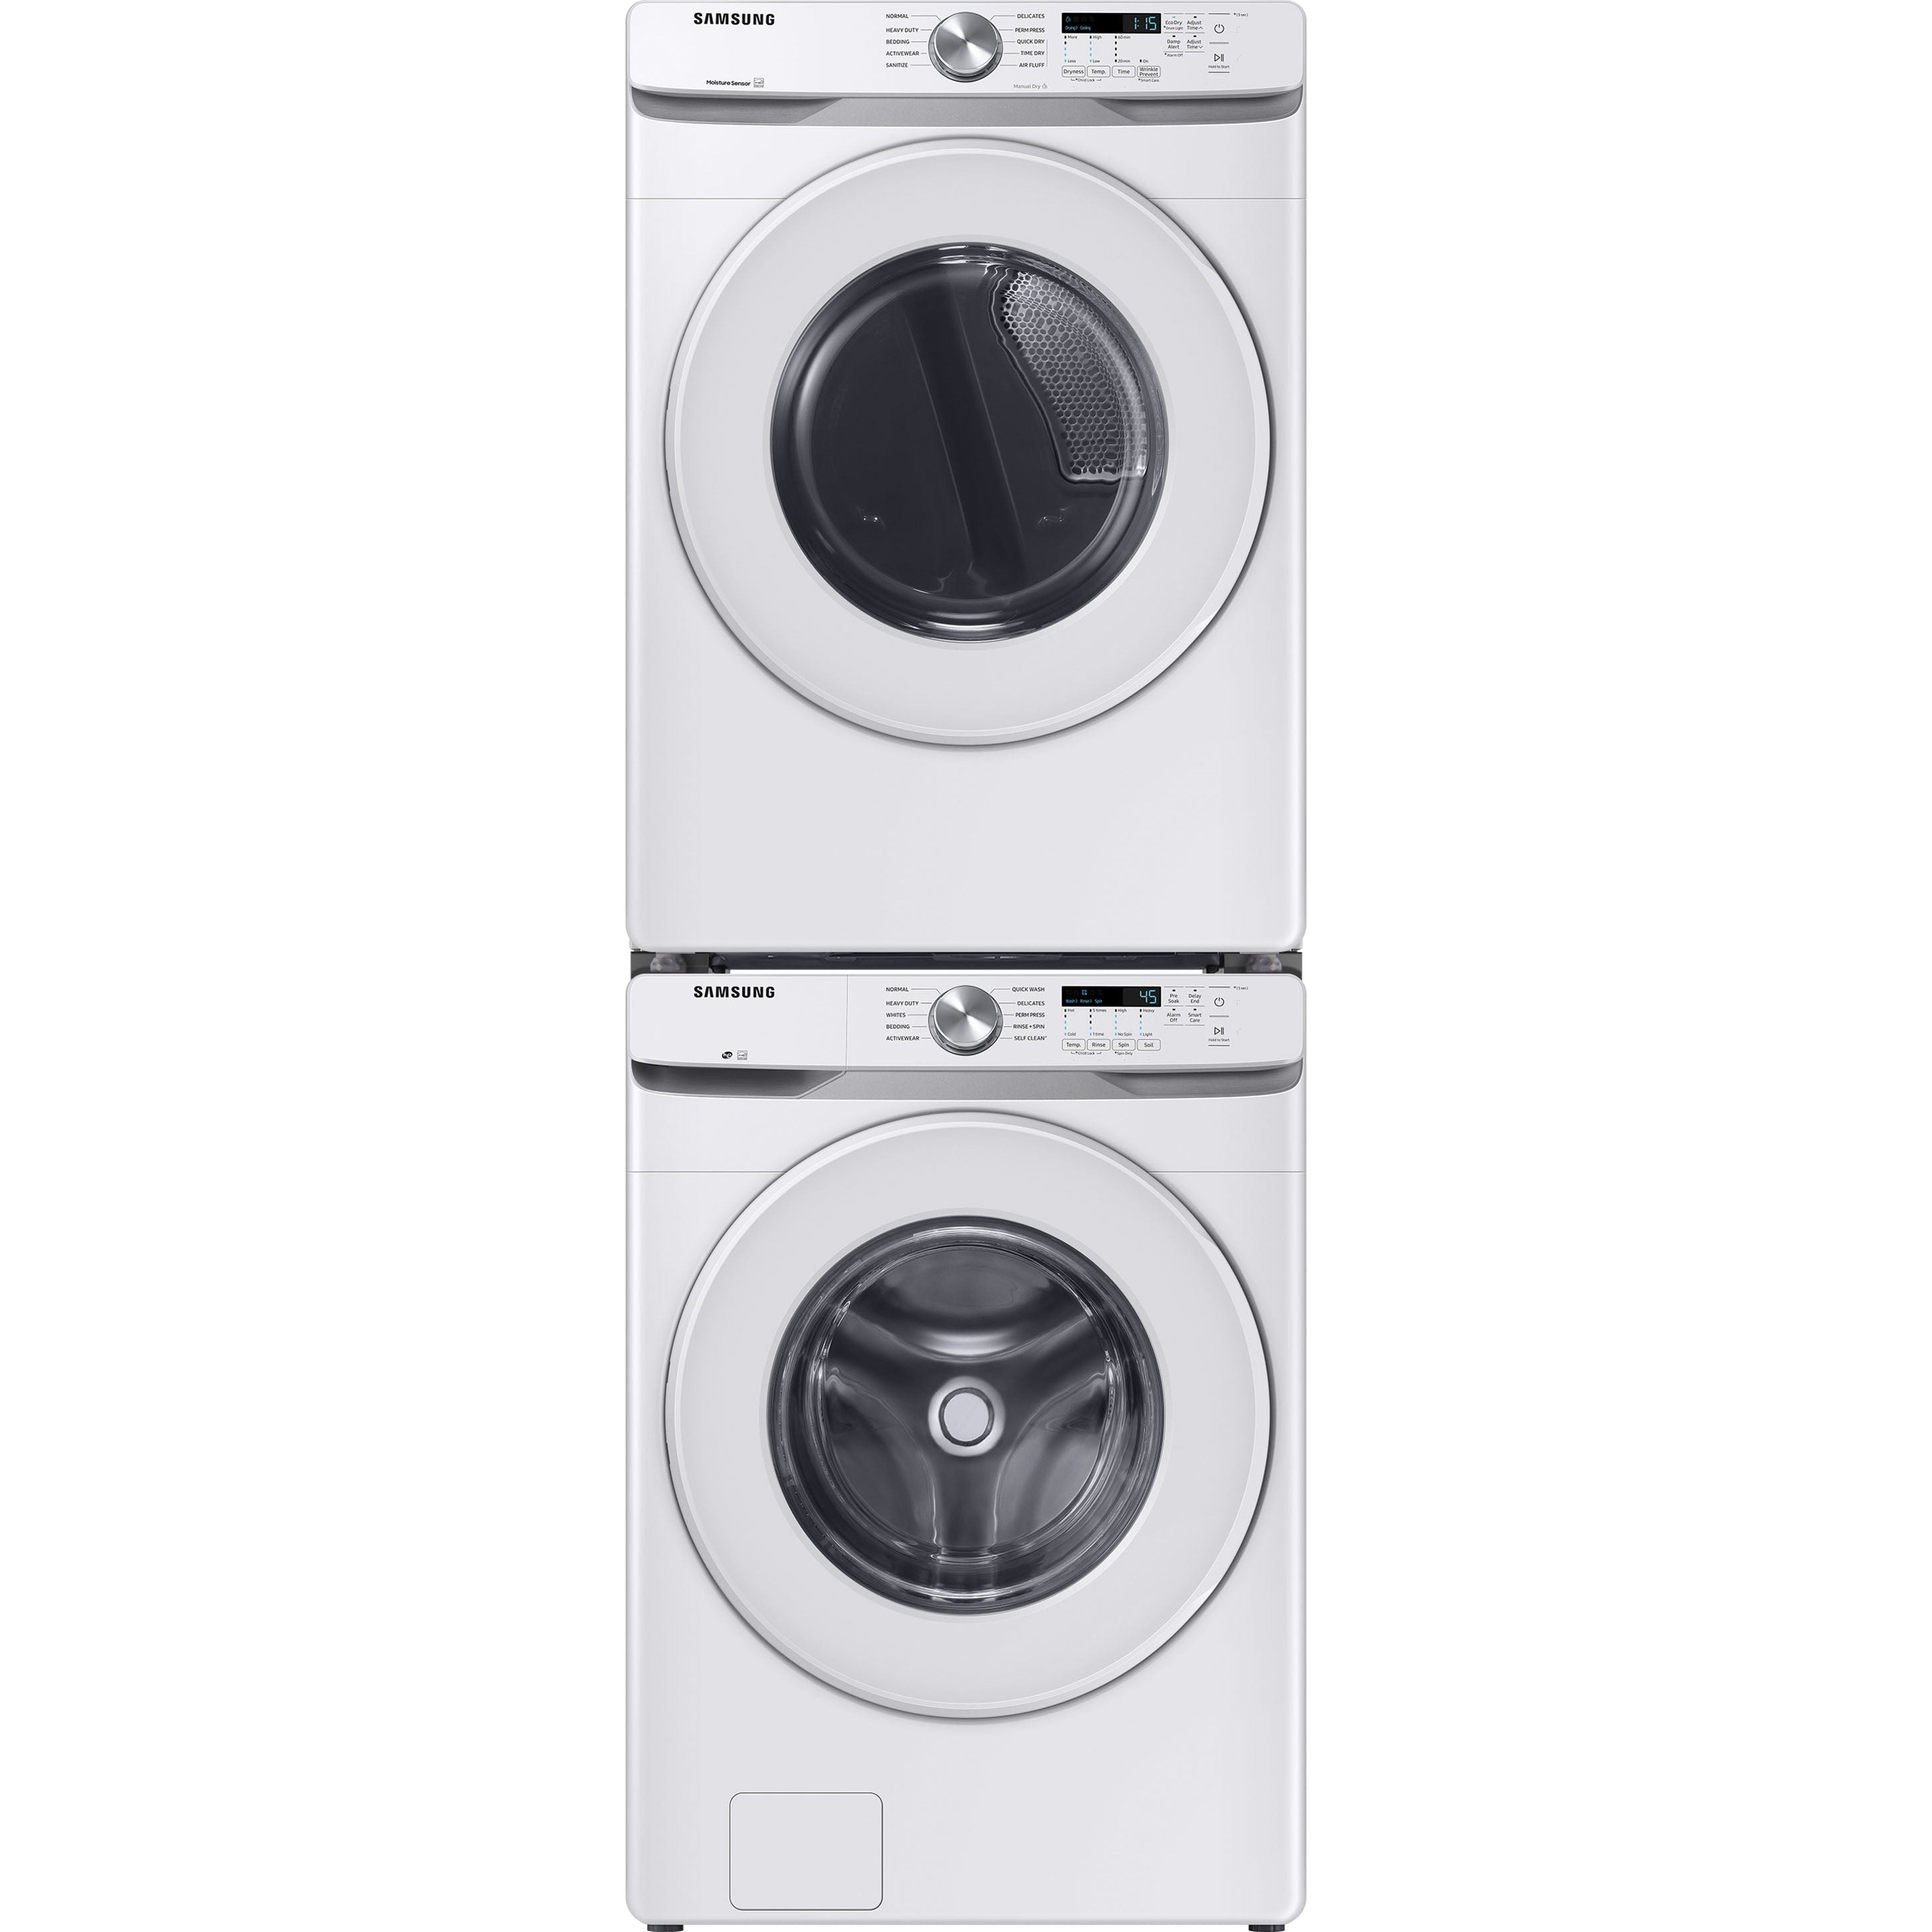 Samsung 7.5 cu.ft. Electric Dryer w/ Energy Star Certification